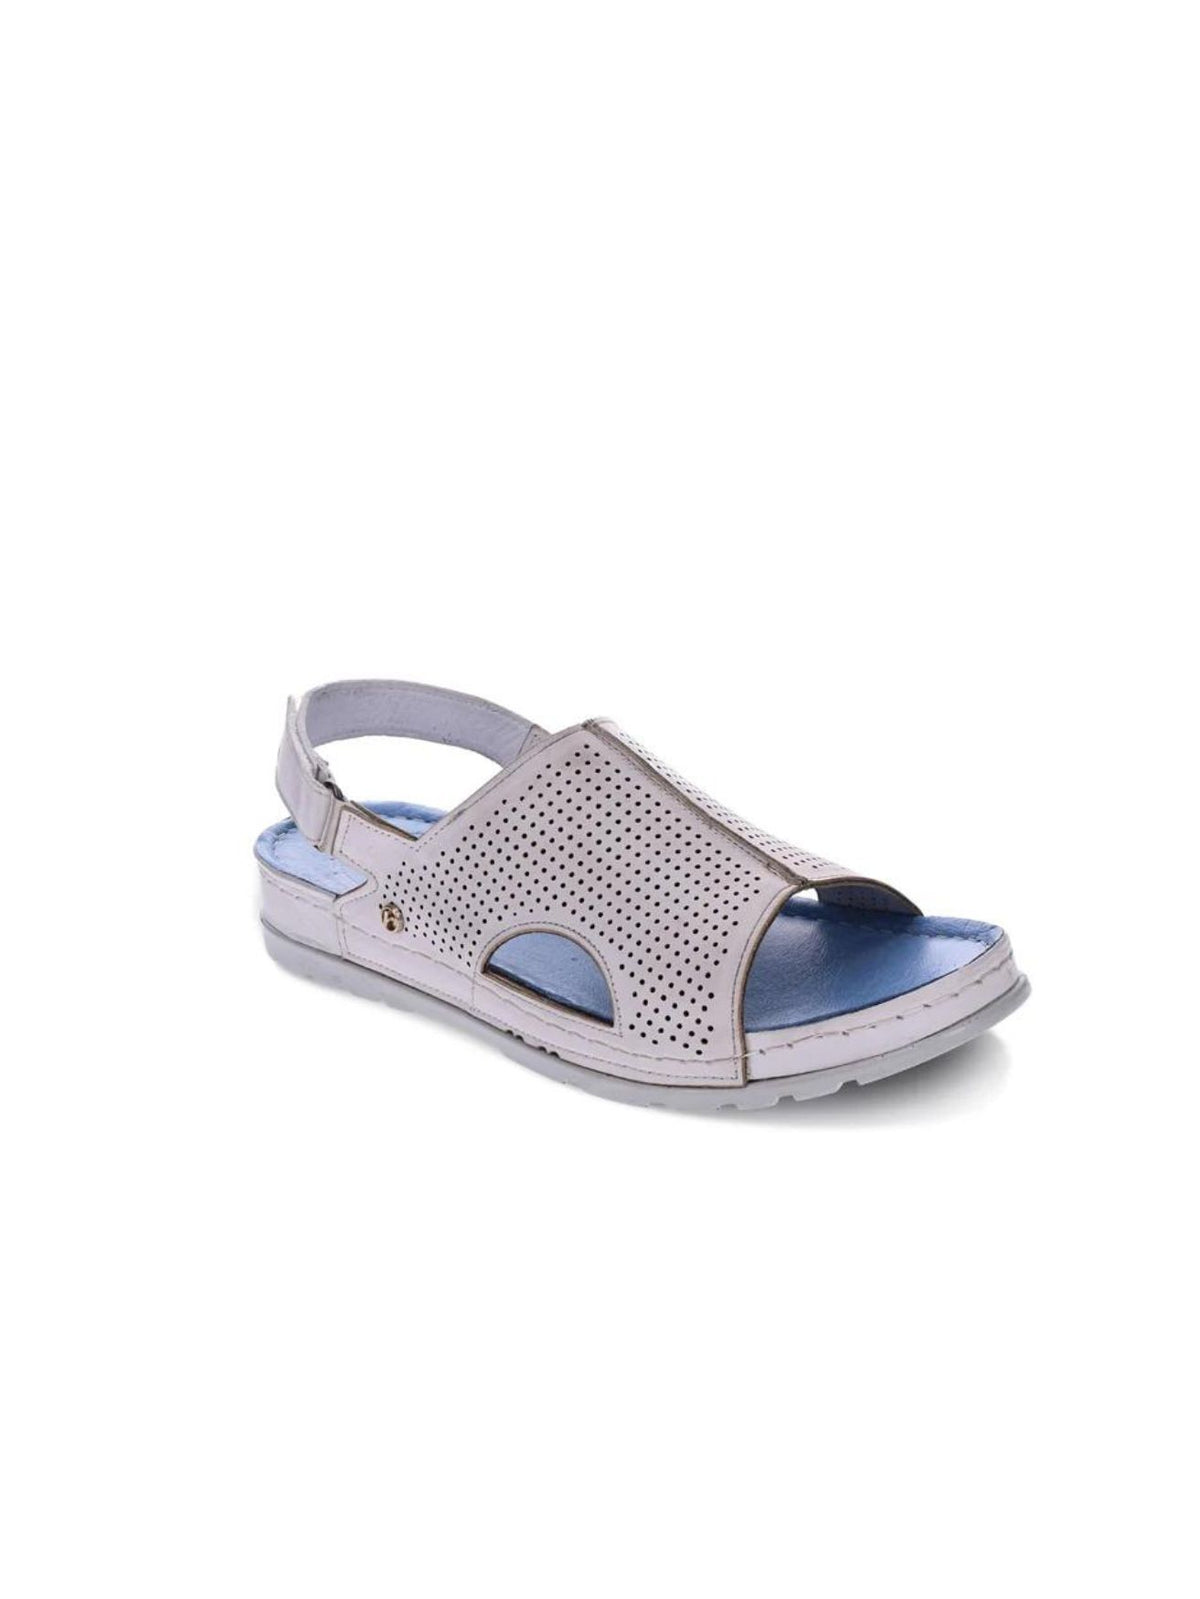 revere trivoli back strap sandals in white-angled view